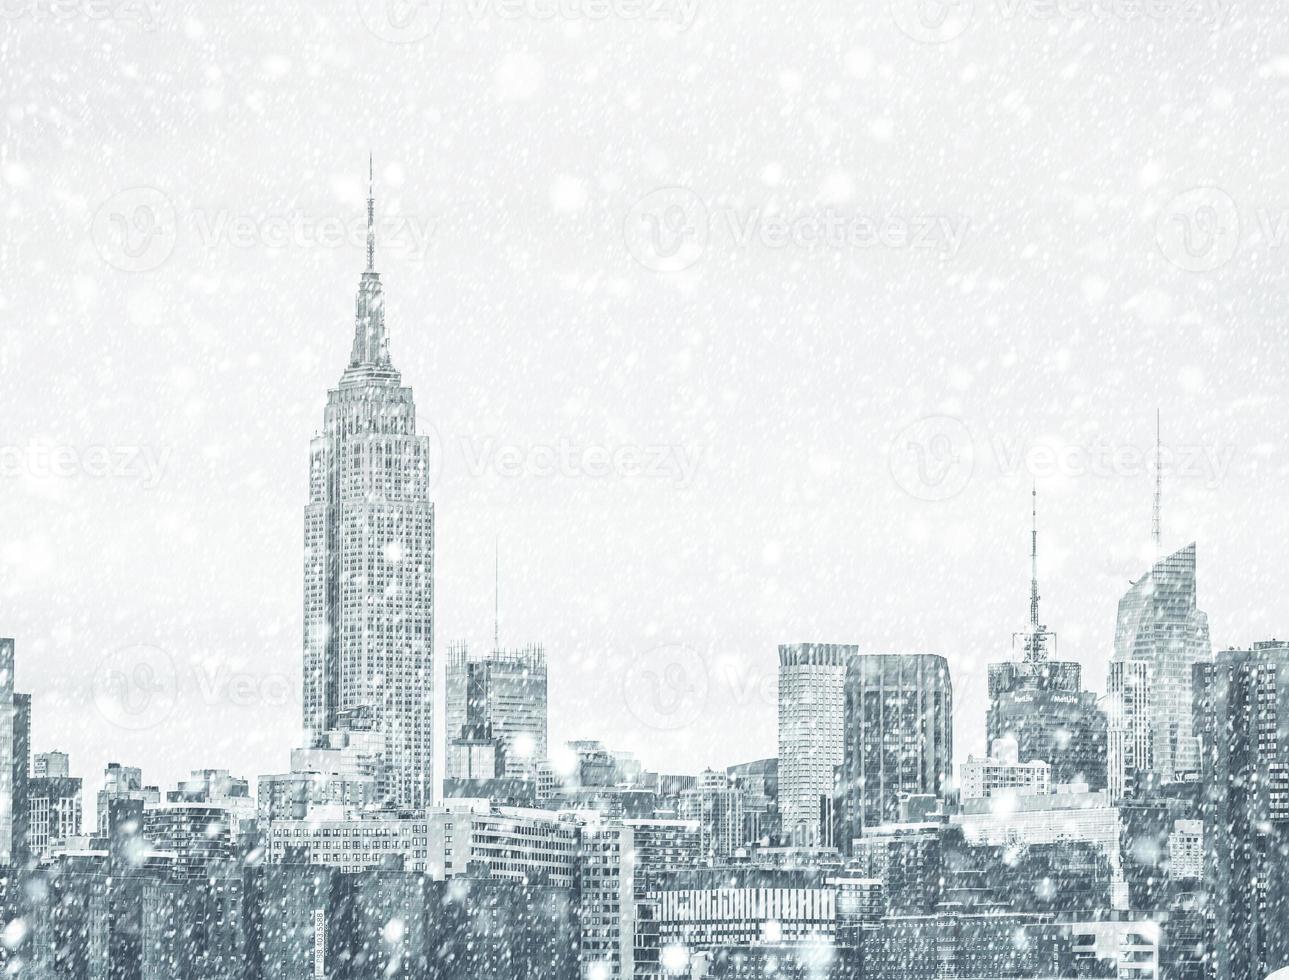 Winter in New York City photo